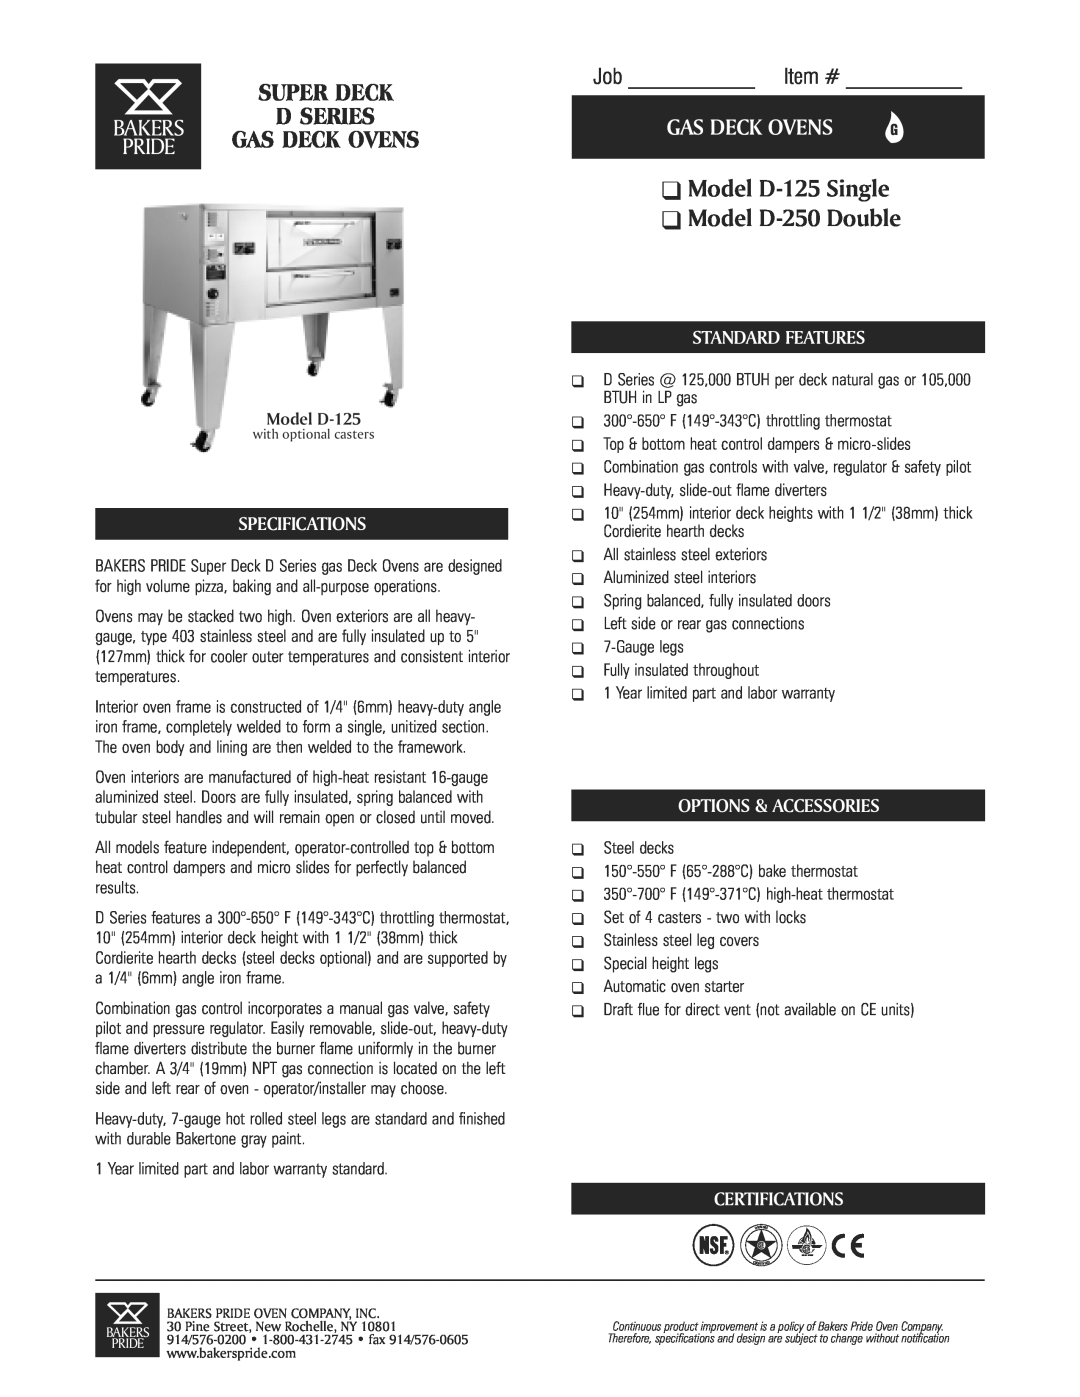 Bakers Pride Oven specifications Il Forno Classico, Model FC-516 / D-125 Model FC-516 / DS-805, Bakers Pridebrick 